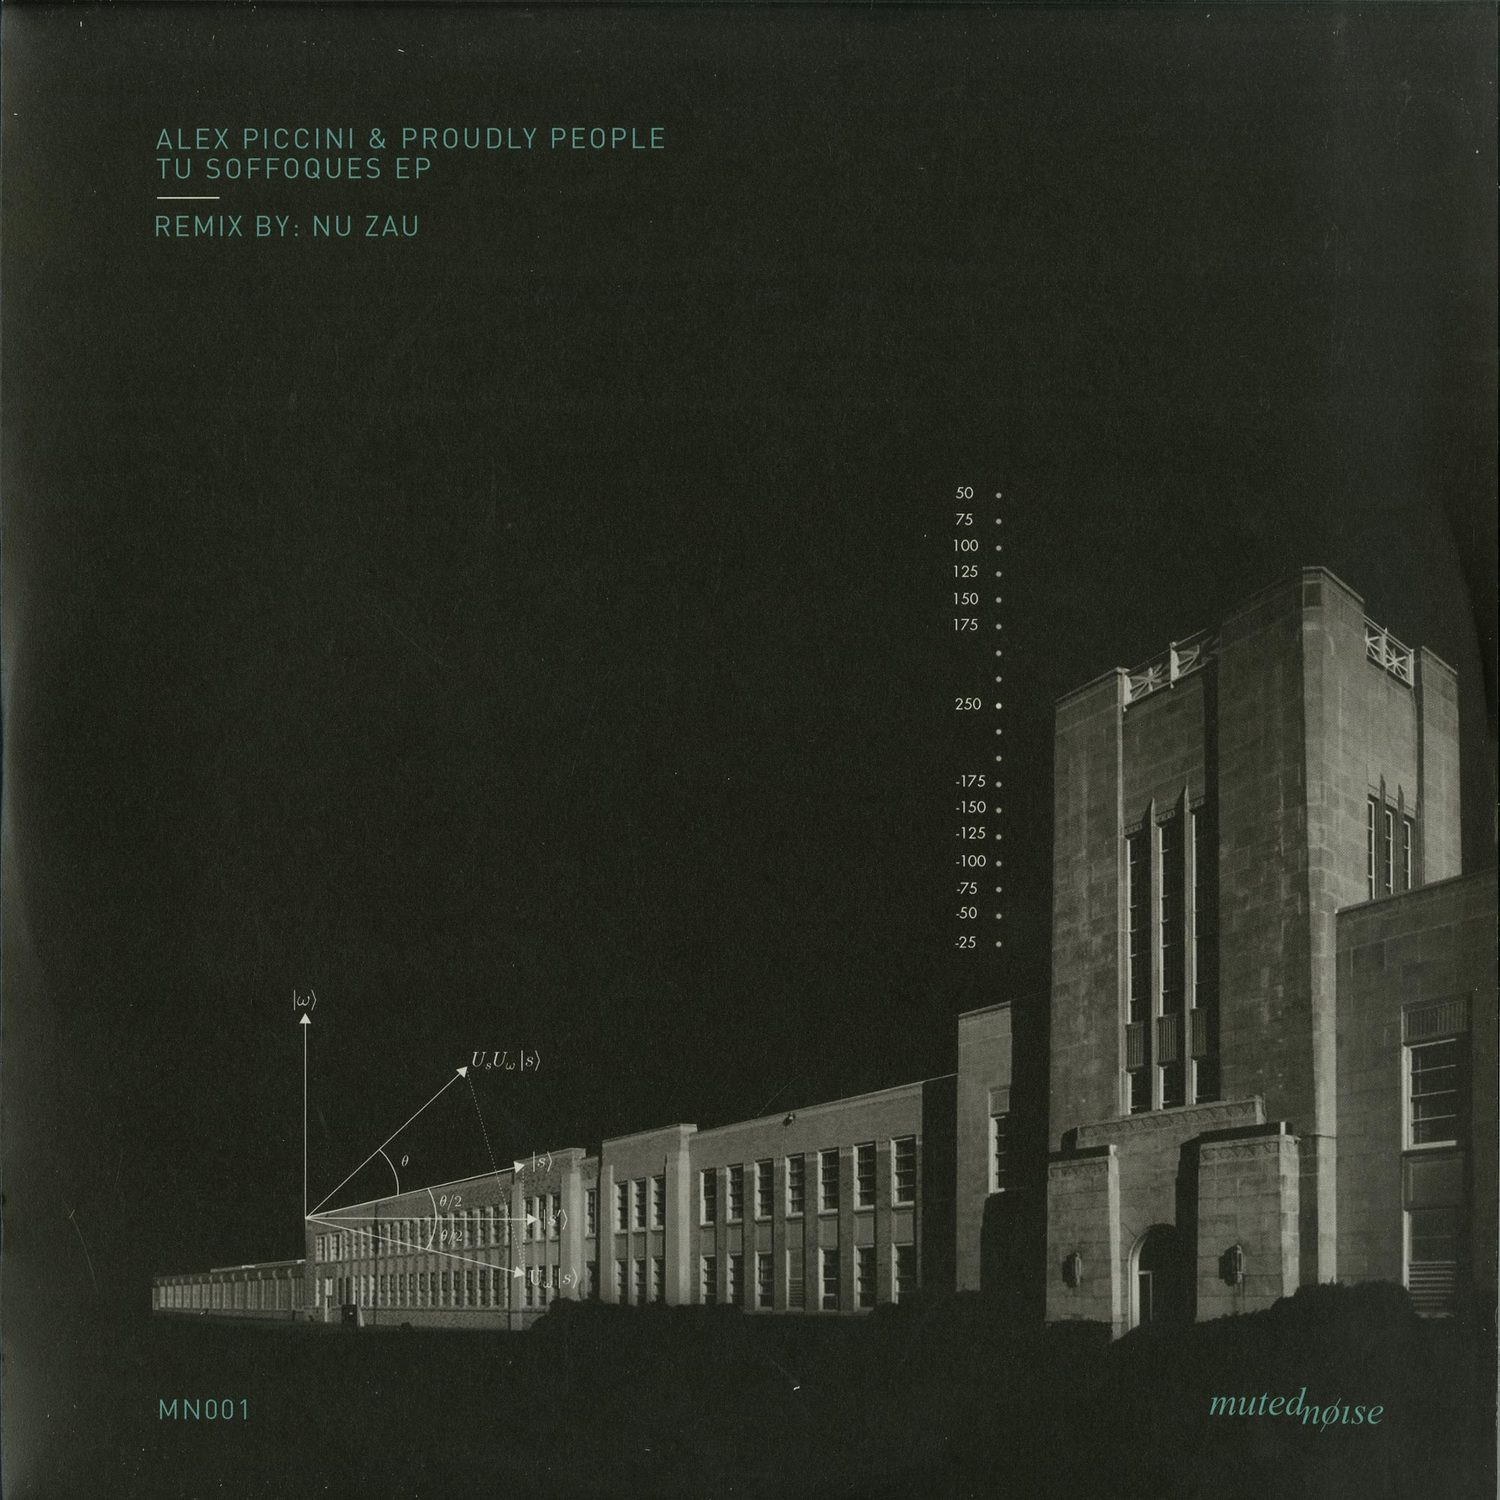 Alex Piccini & Proudly People - TU SOFFOQUES EP 